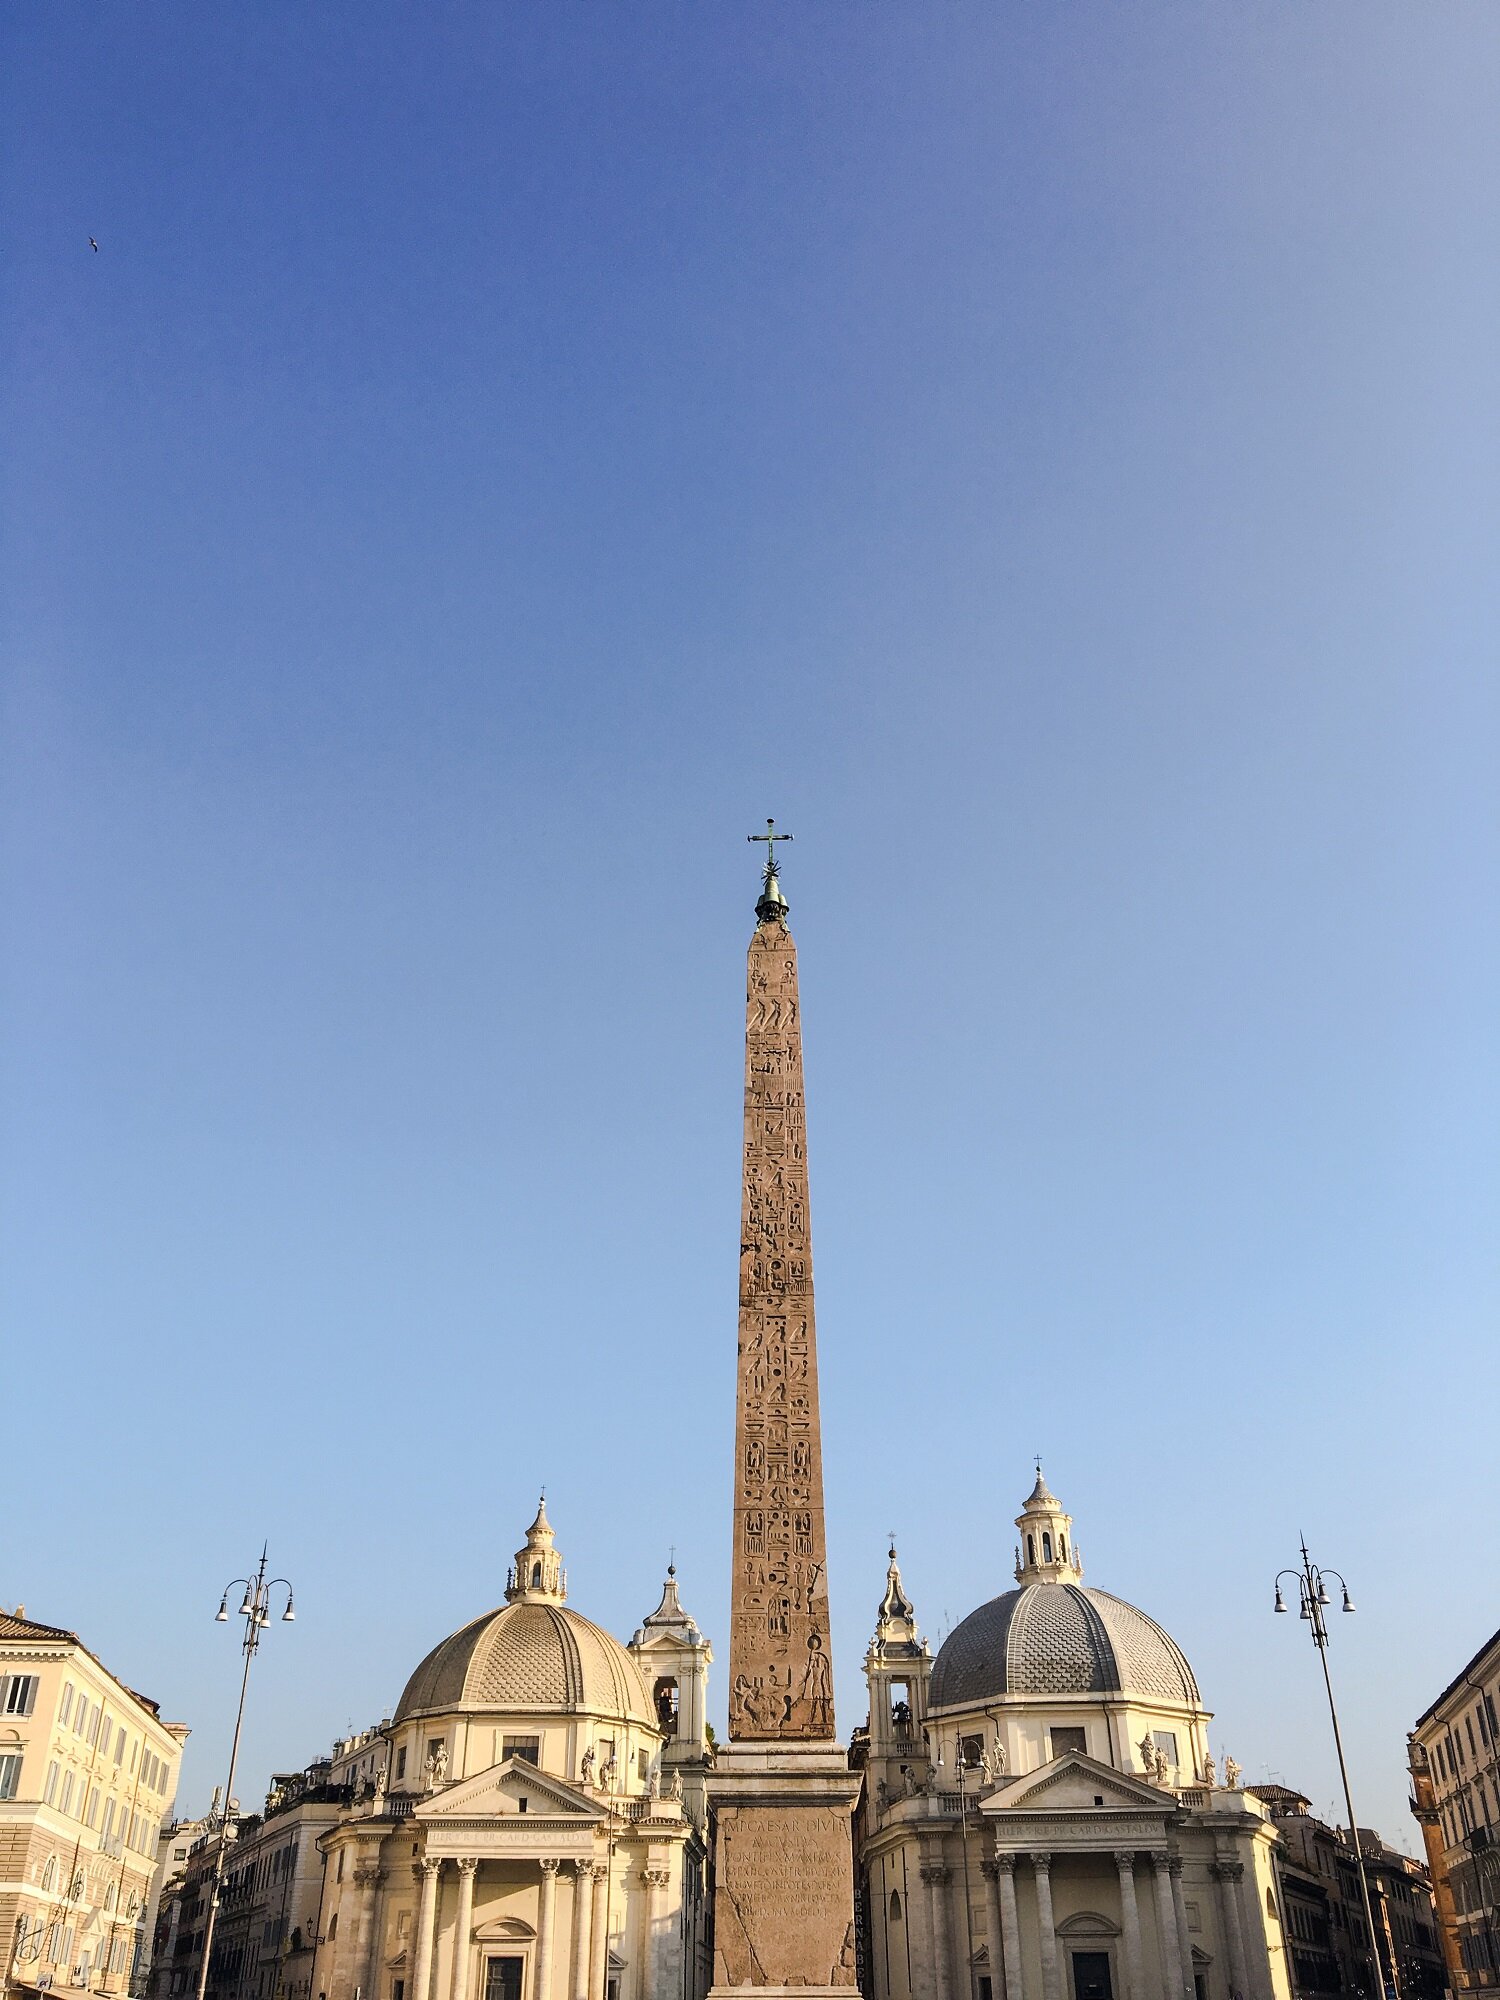 Piazza del Popolo | Blooming Magnolias Blog | Travel, Rome, Italy